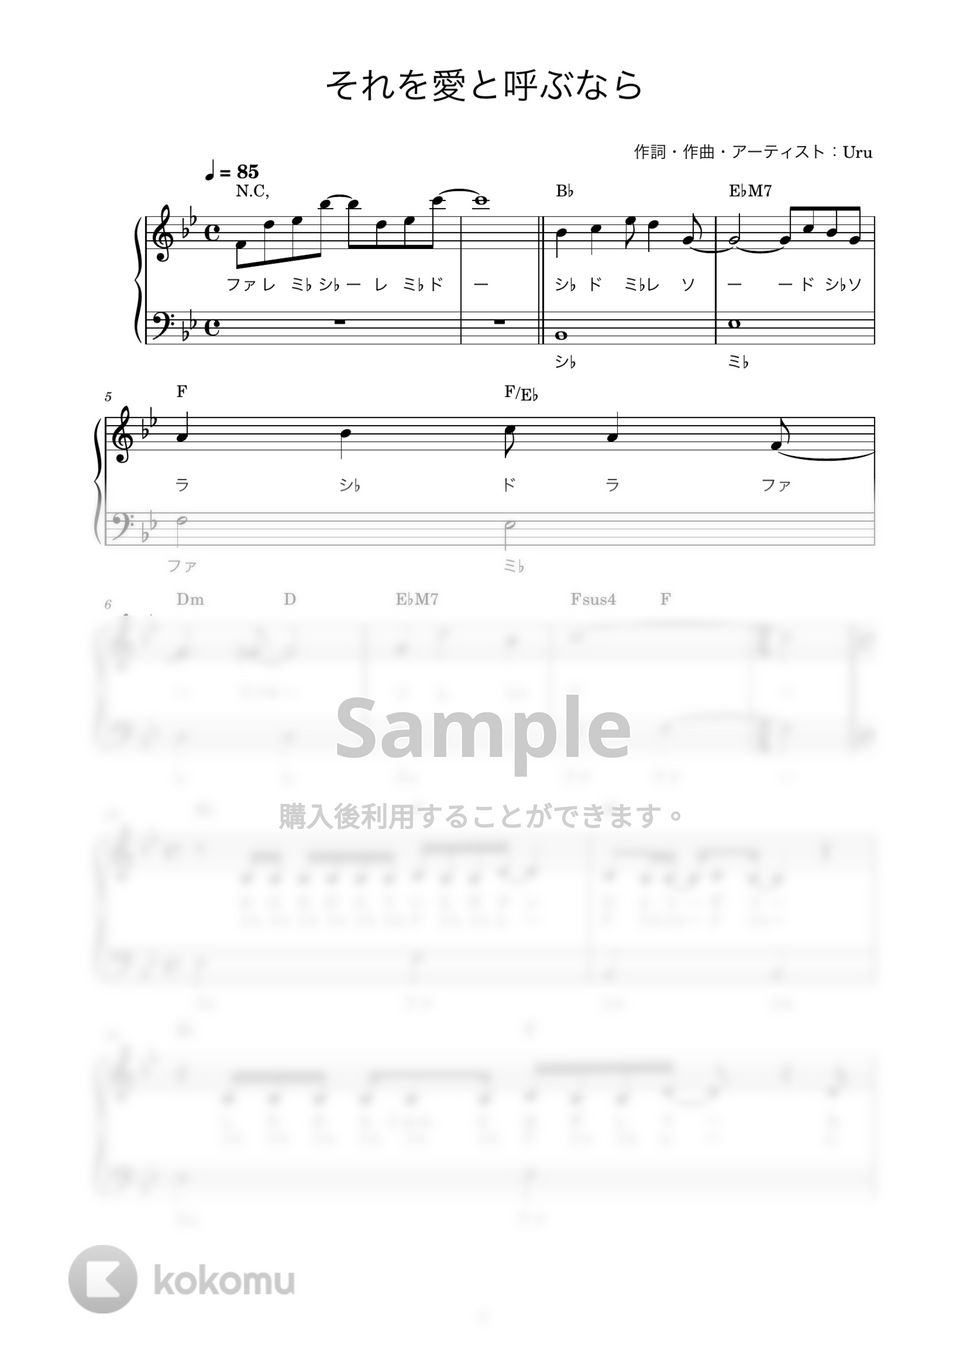 Uru - それを愛と呼ぶなら (かんたん / 歌詞付き / ドレミ付き / 初心者) by piano.tokyo